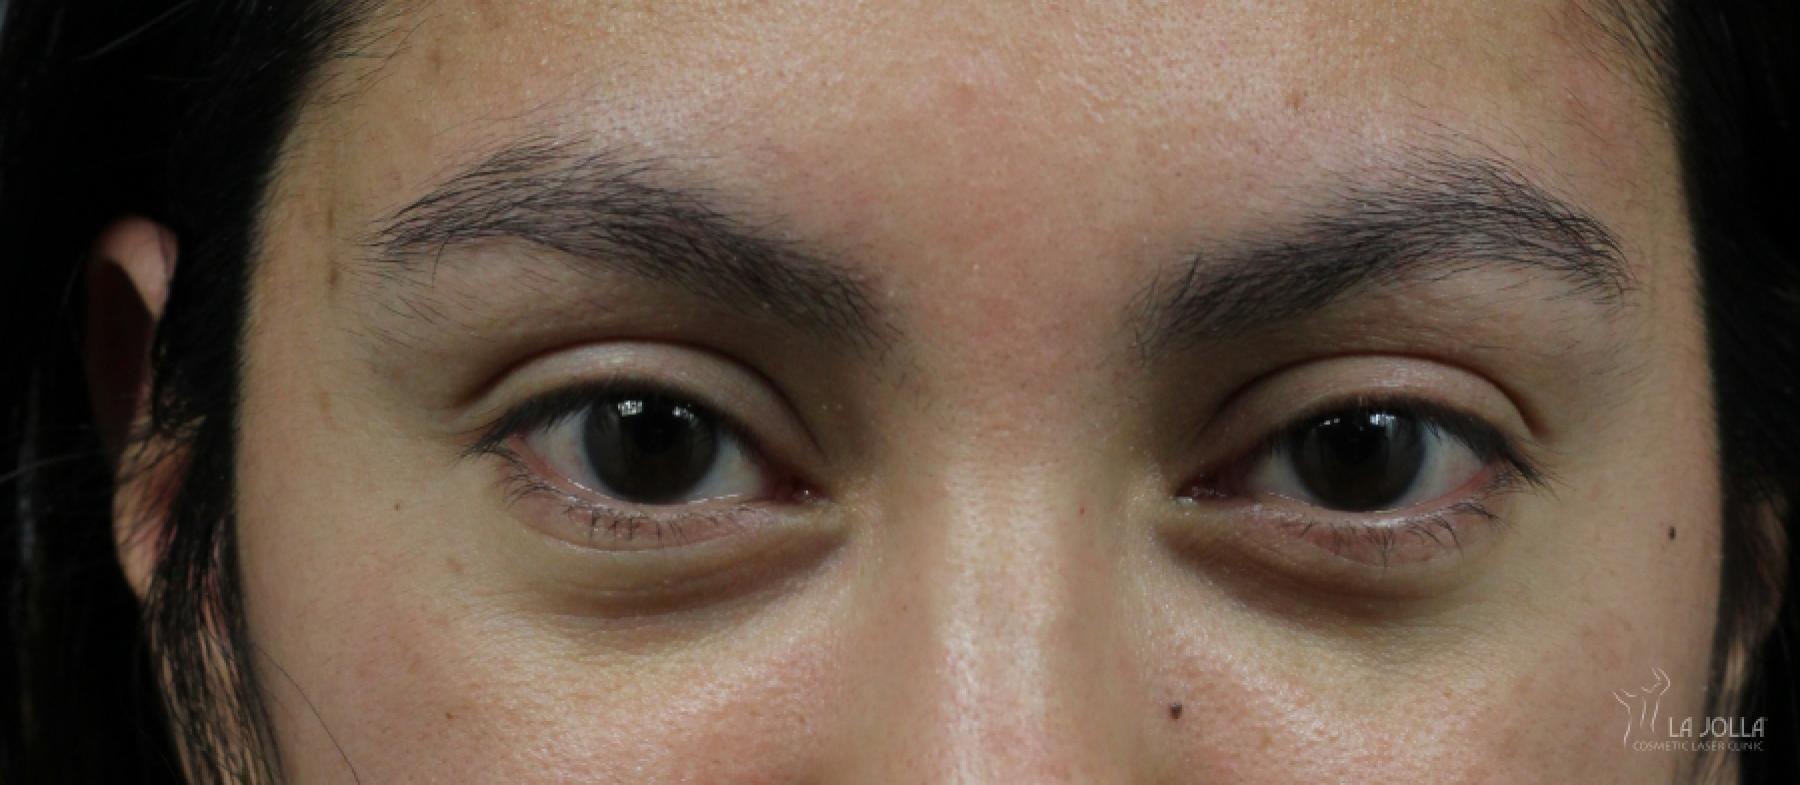 Under Eye Filler: Patient 6 - Before 